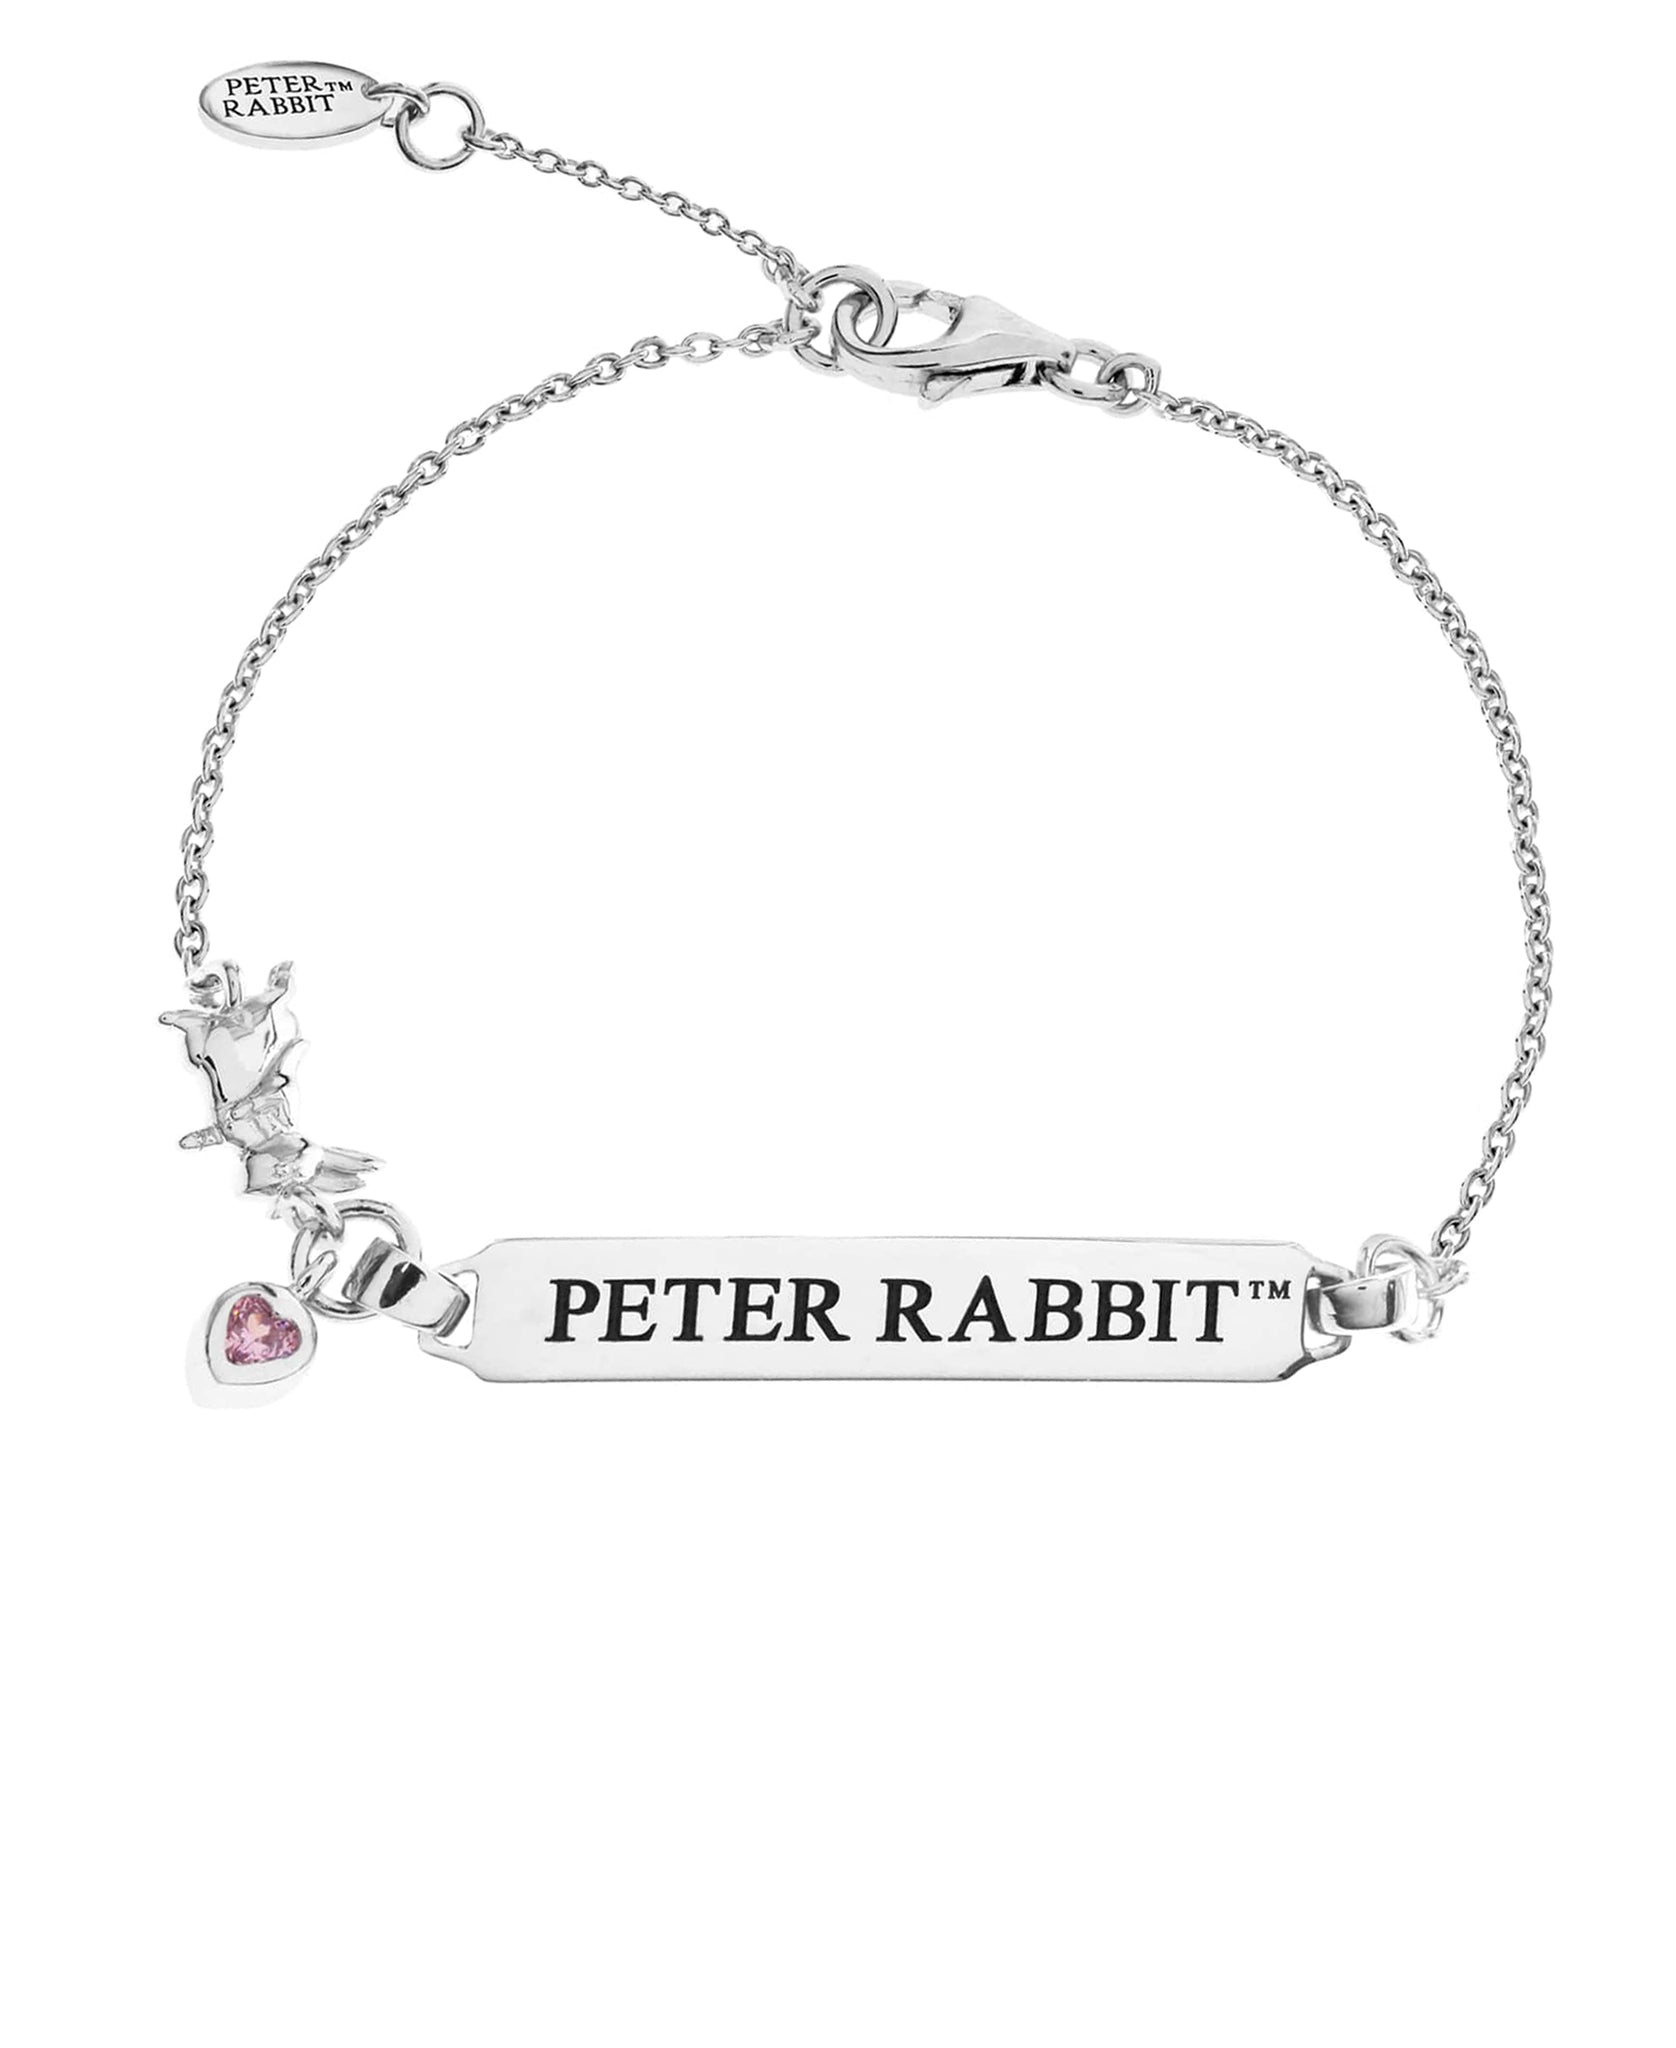 Beatrix Potter Sterling Silver Peter Rabbit ID Charm Bracelet - Rhona Sutton Jewellery